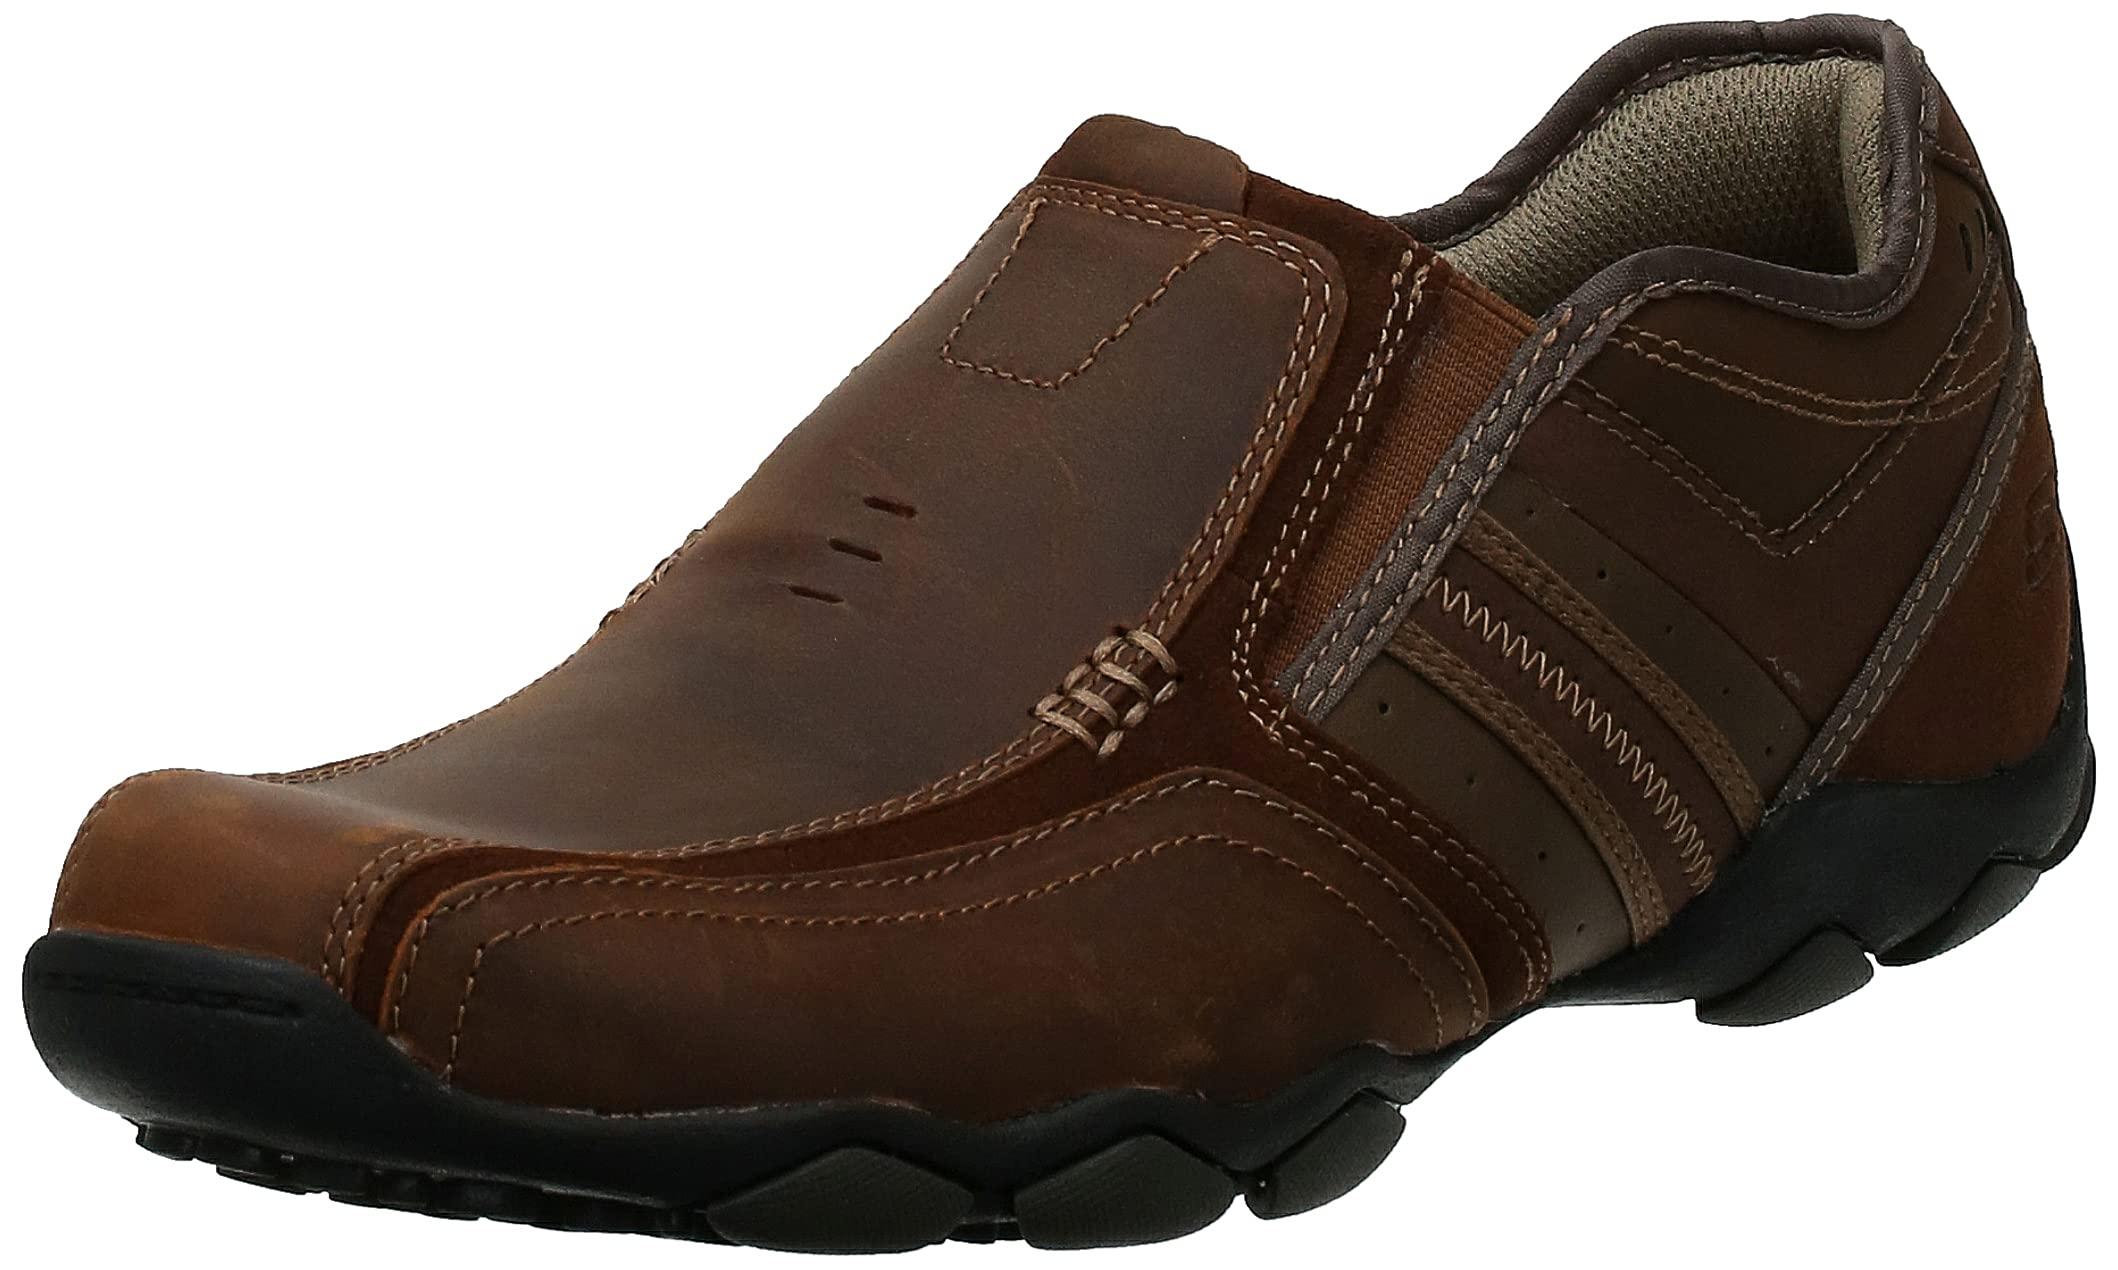 Skechers Leather Diameter Zinroy Shoes in Dark Brown (Brown) for Men - Save  44% - Lyst